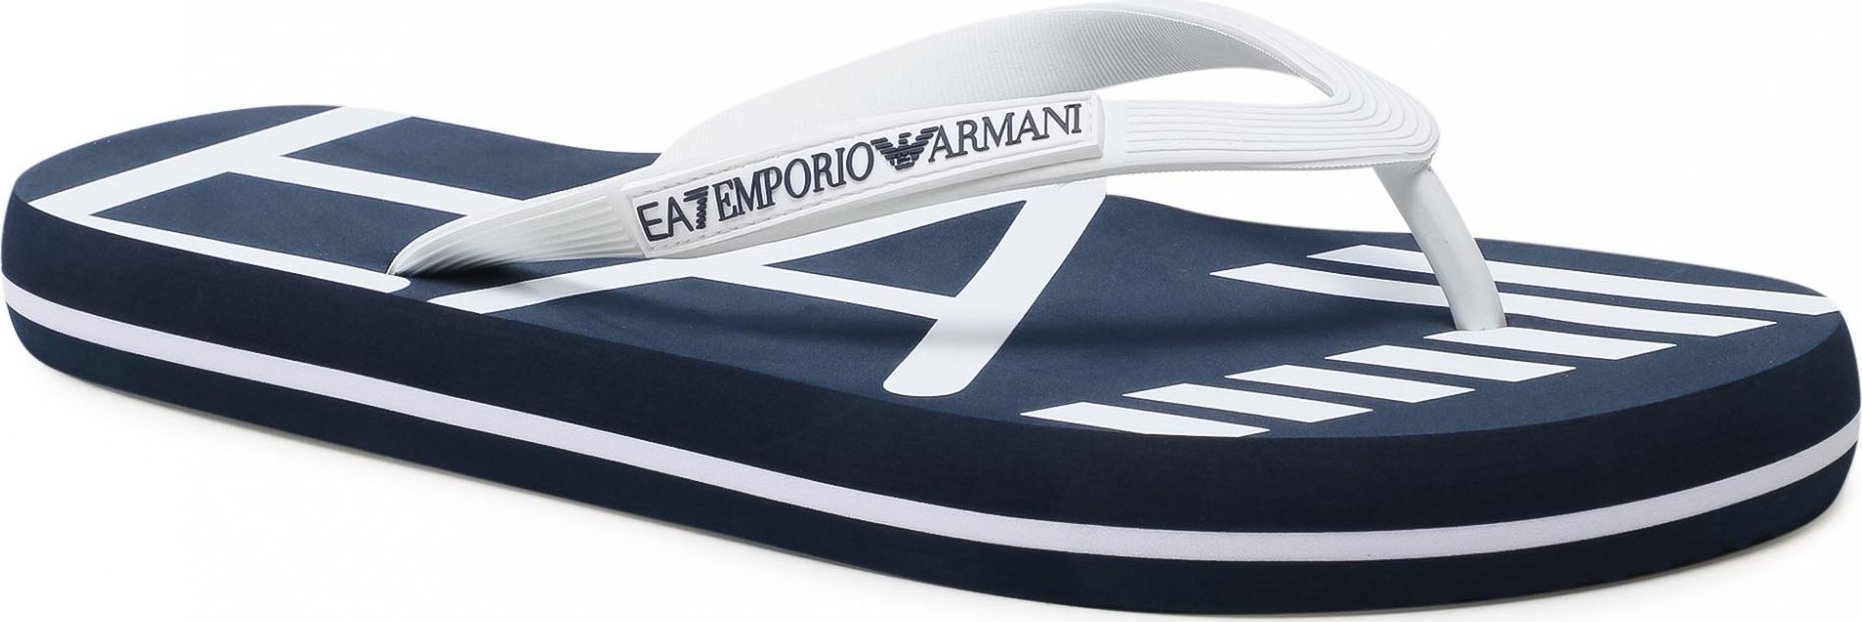 EA7 Emporio Armani XCQ004 XK196 N527